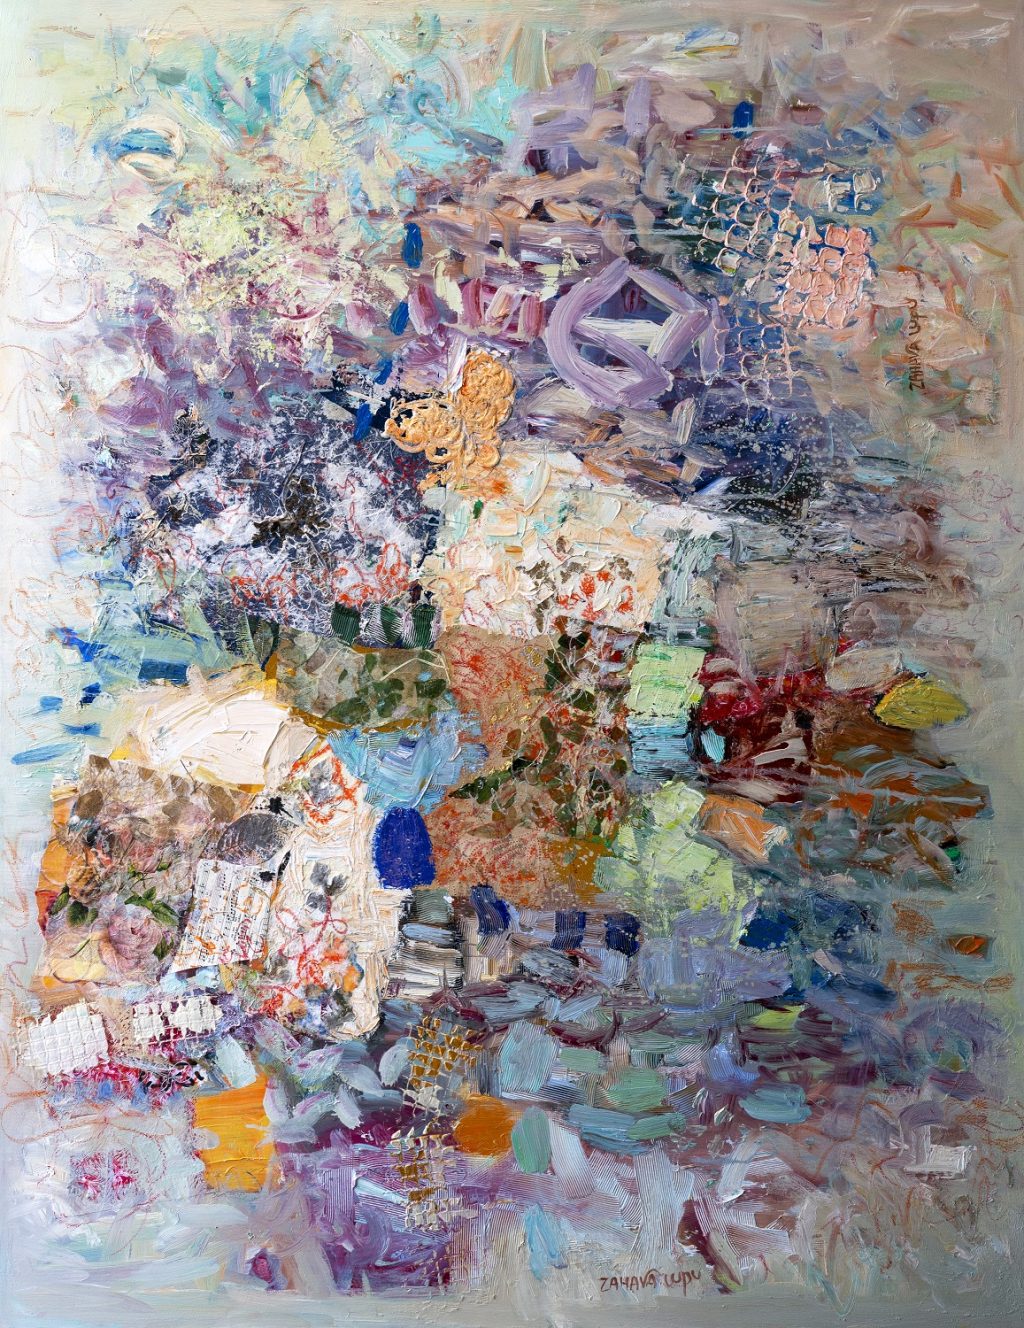 Art time gallery Jerusalem(Art online) -  Zahava Lupu - Music & Flowers - Original Oil on Canvas - 100 x 130cm cm / 40 x52 inches